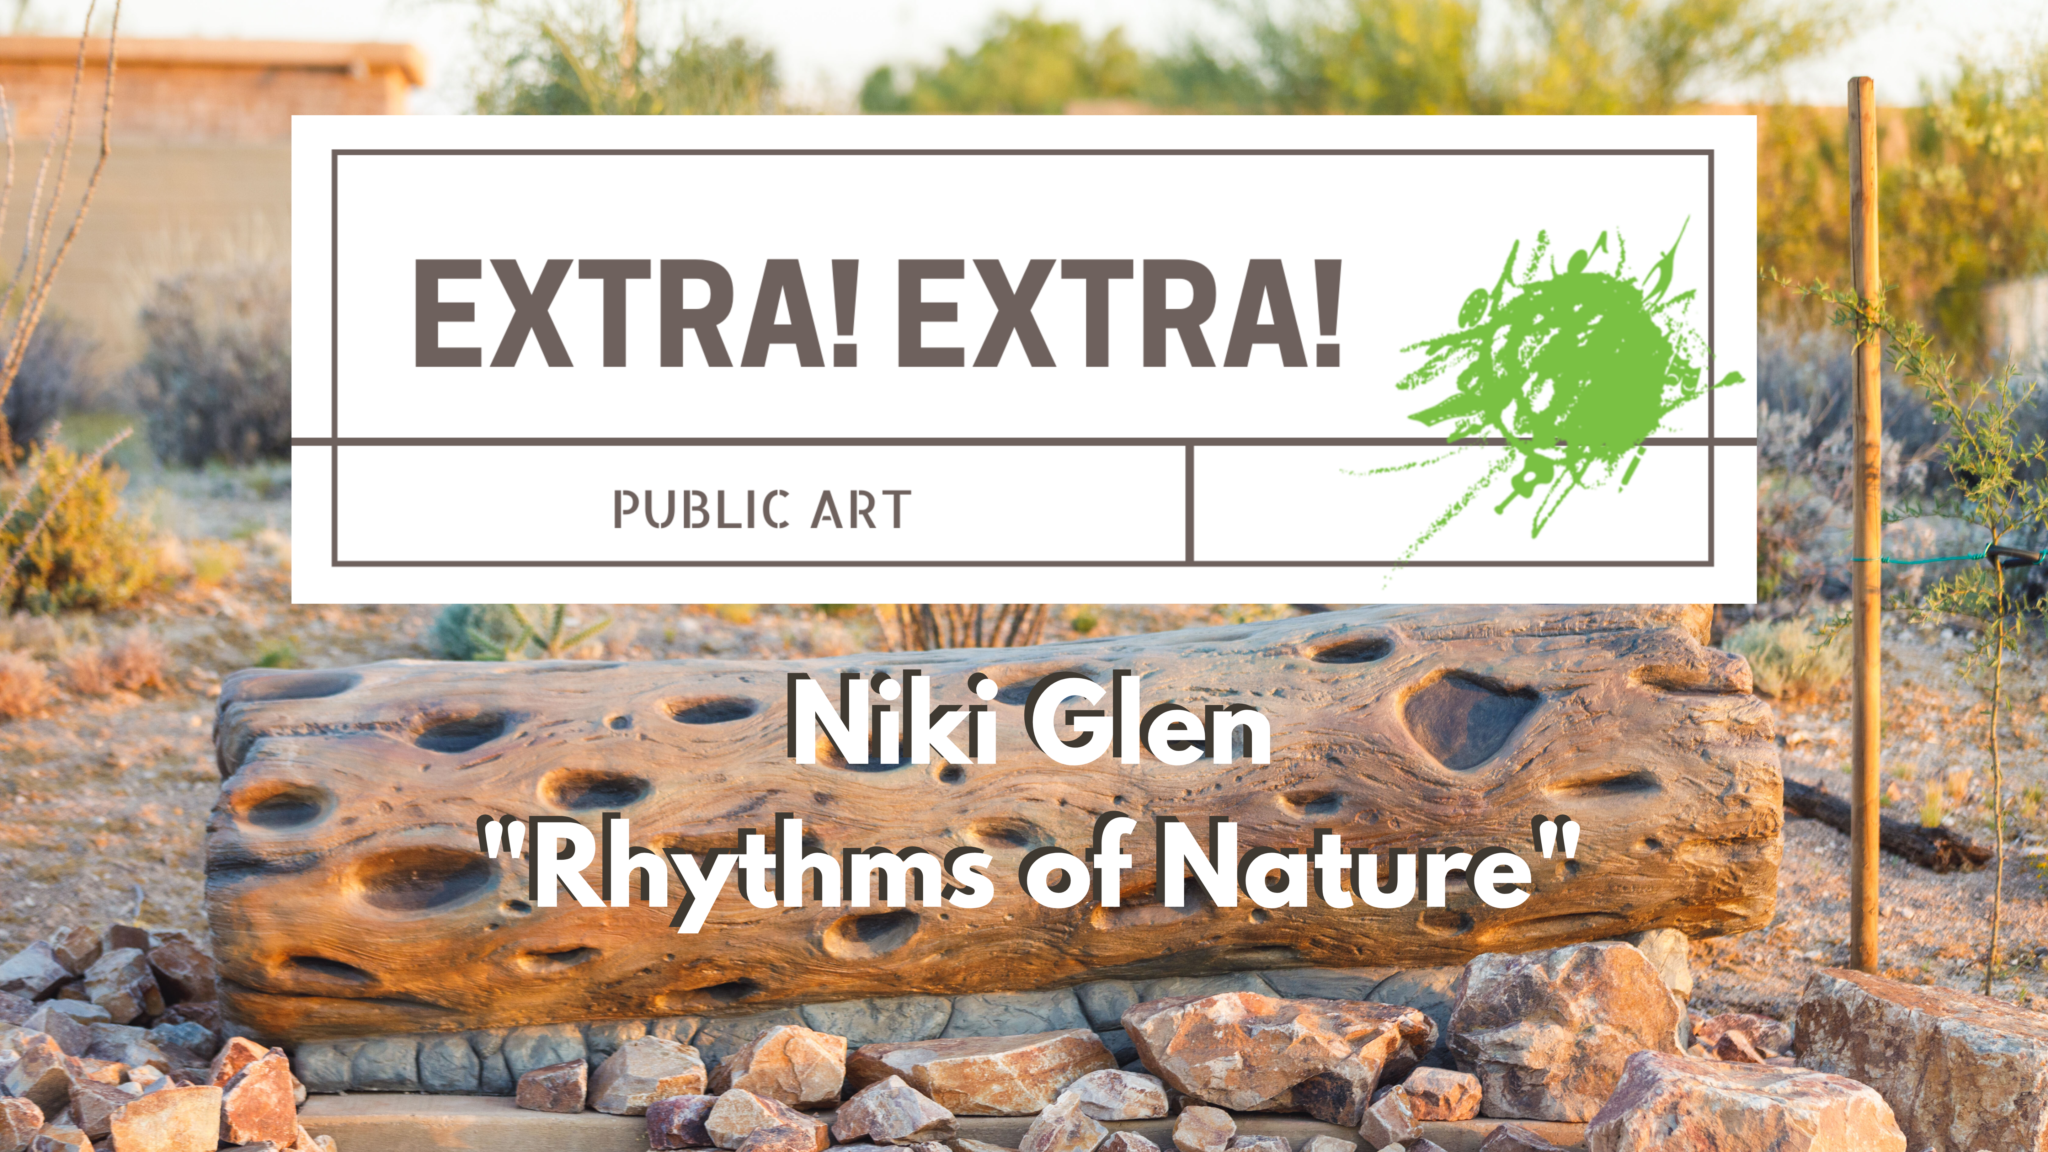 EXTRA! EXTRA!: Niki Glen and “Rhythms of Nature”